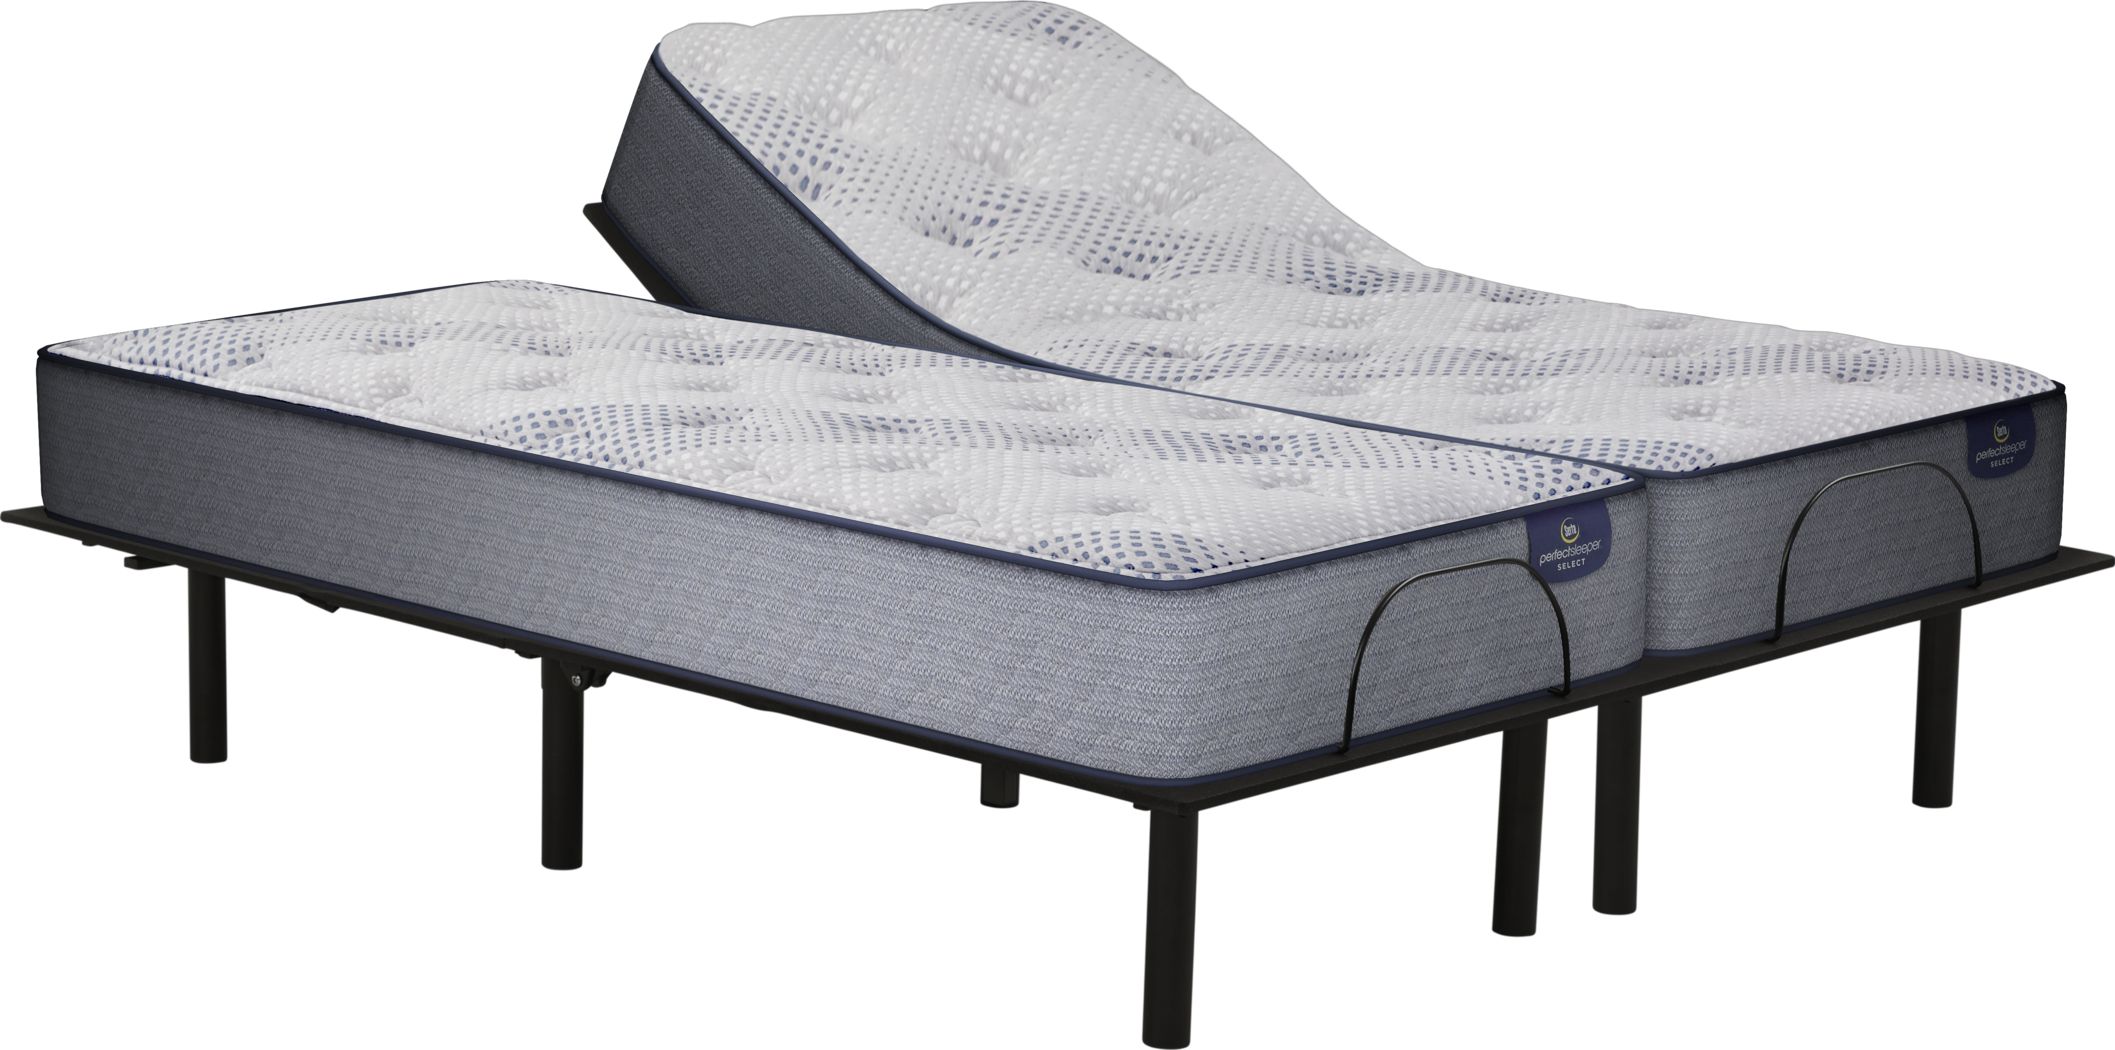 serta perfectnight idirections mattress